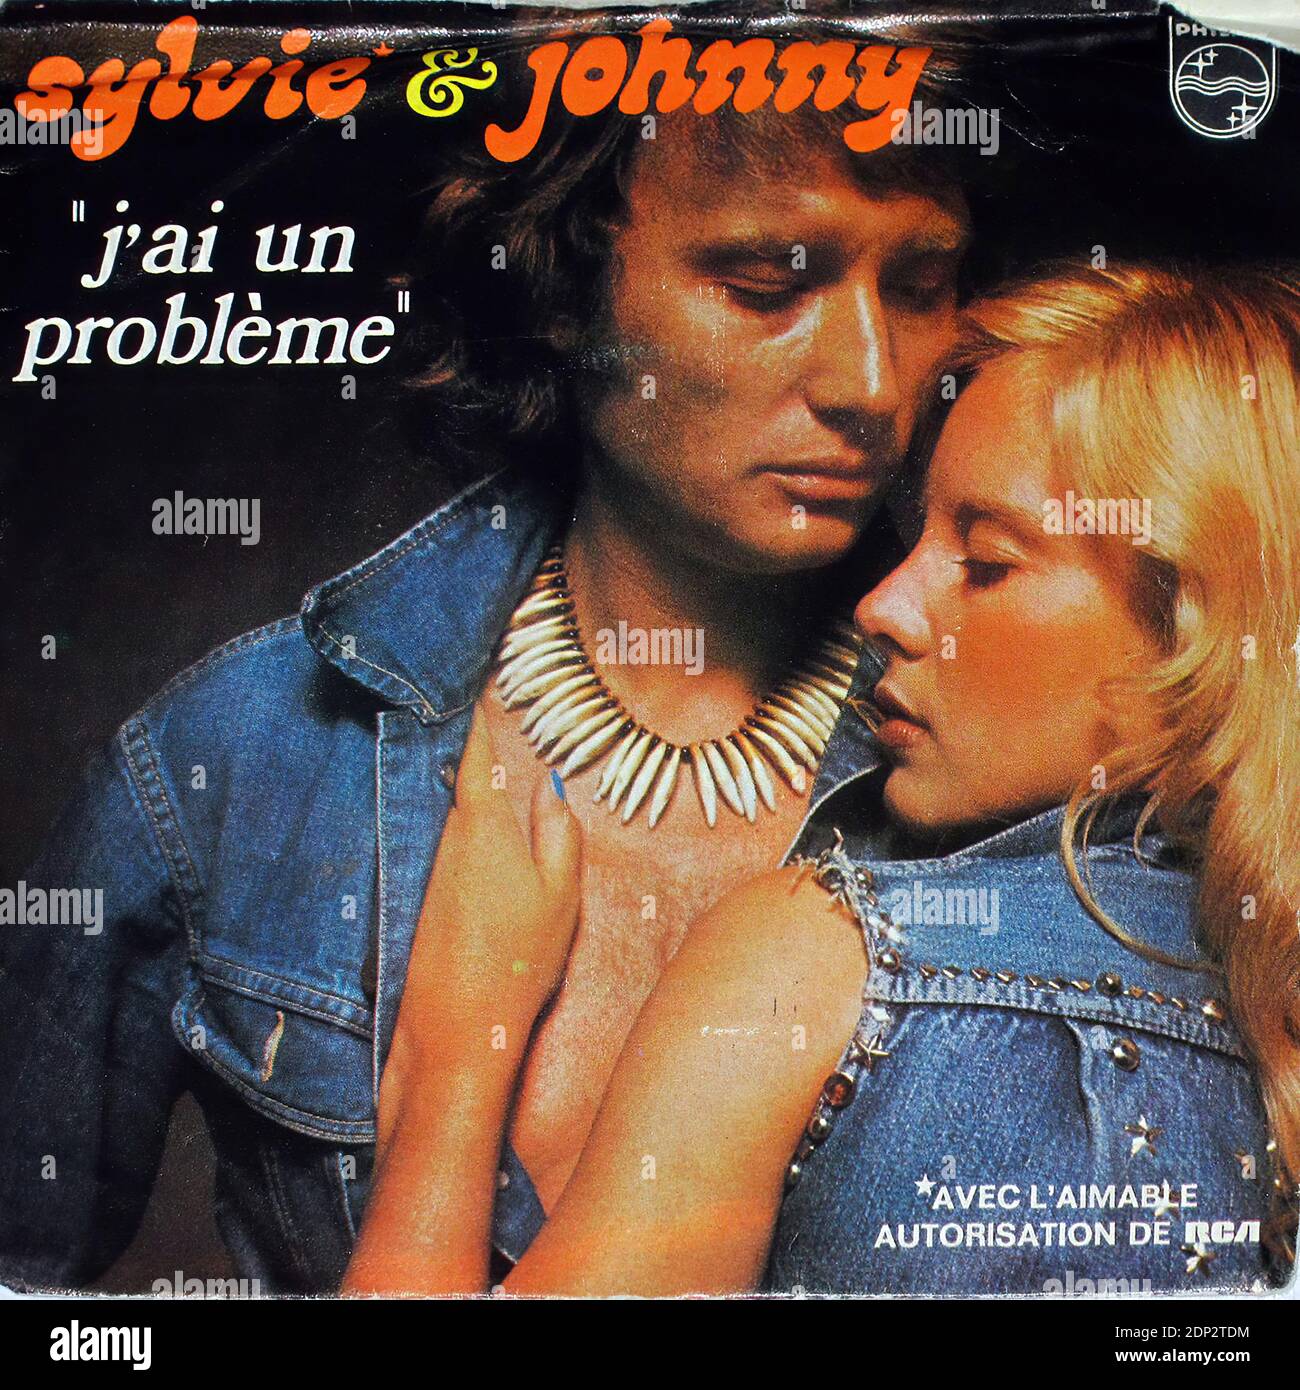 SYLVIE VARTAN JOHNNY HALLYDAY J'AI UN PROBLEME 7  PS Single - Vintage Vinyl Record Cover Stock Photo